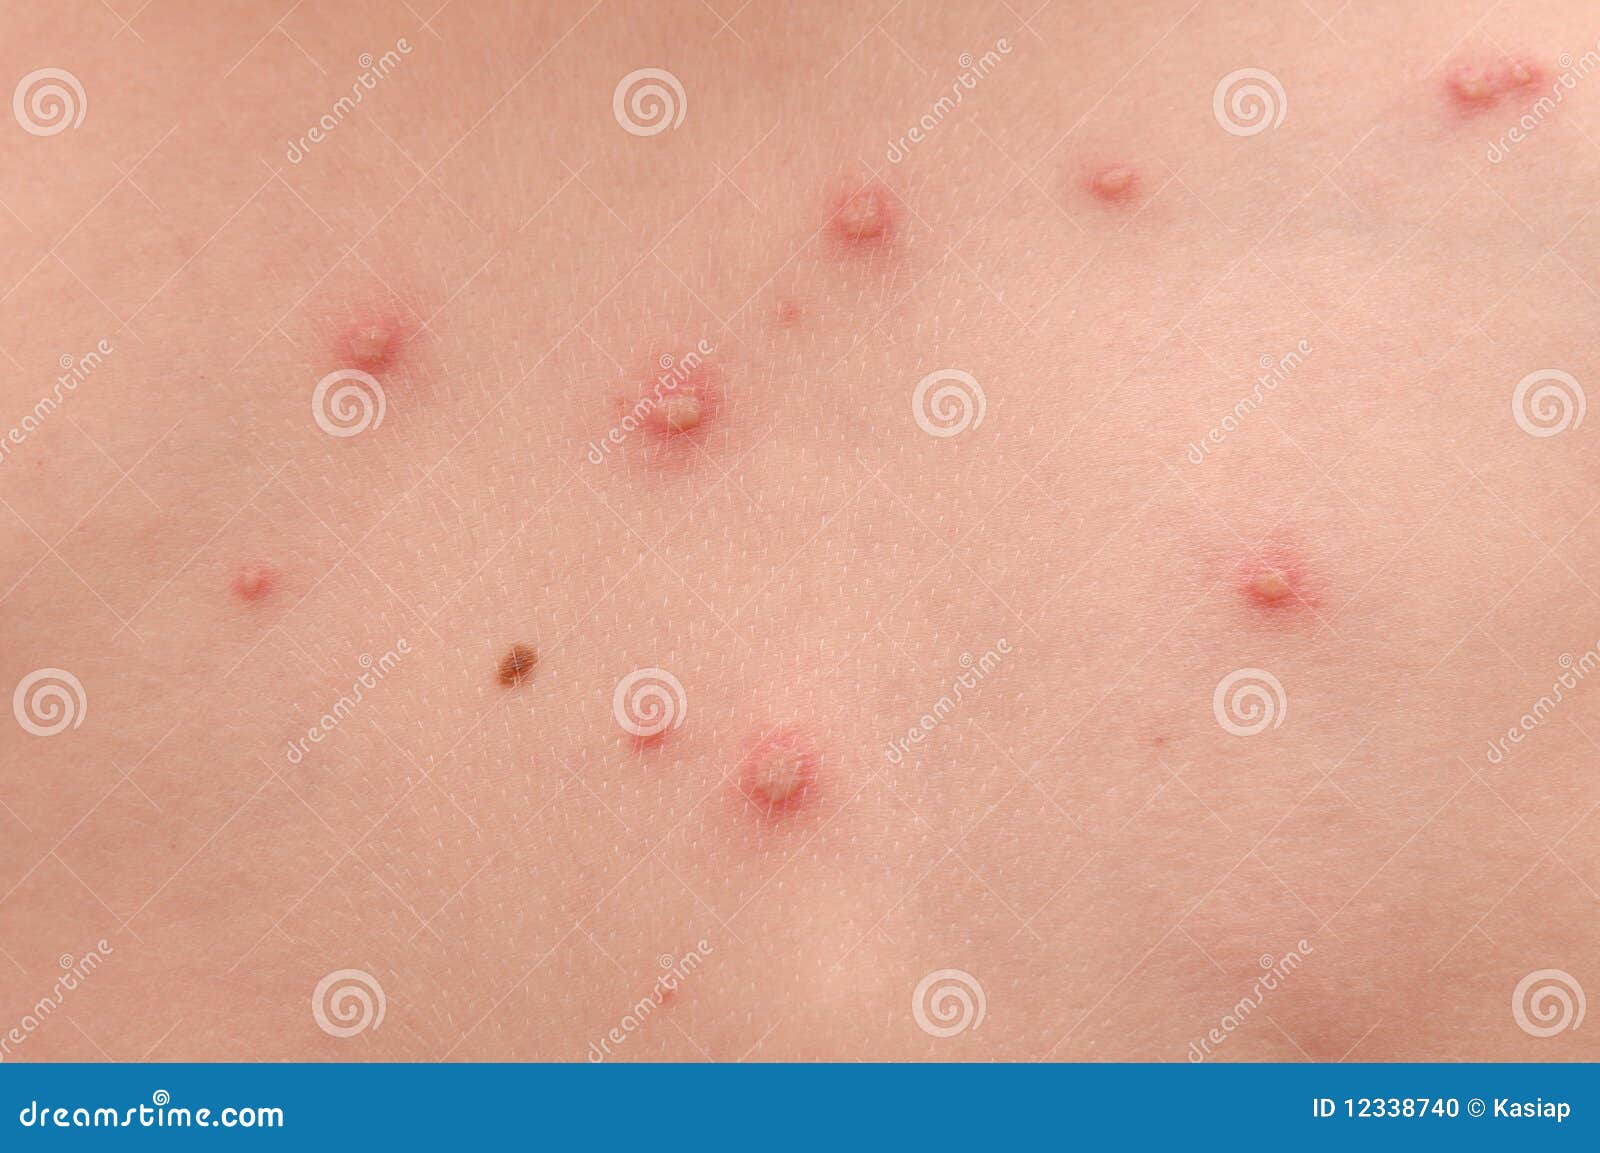 rash on your back